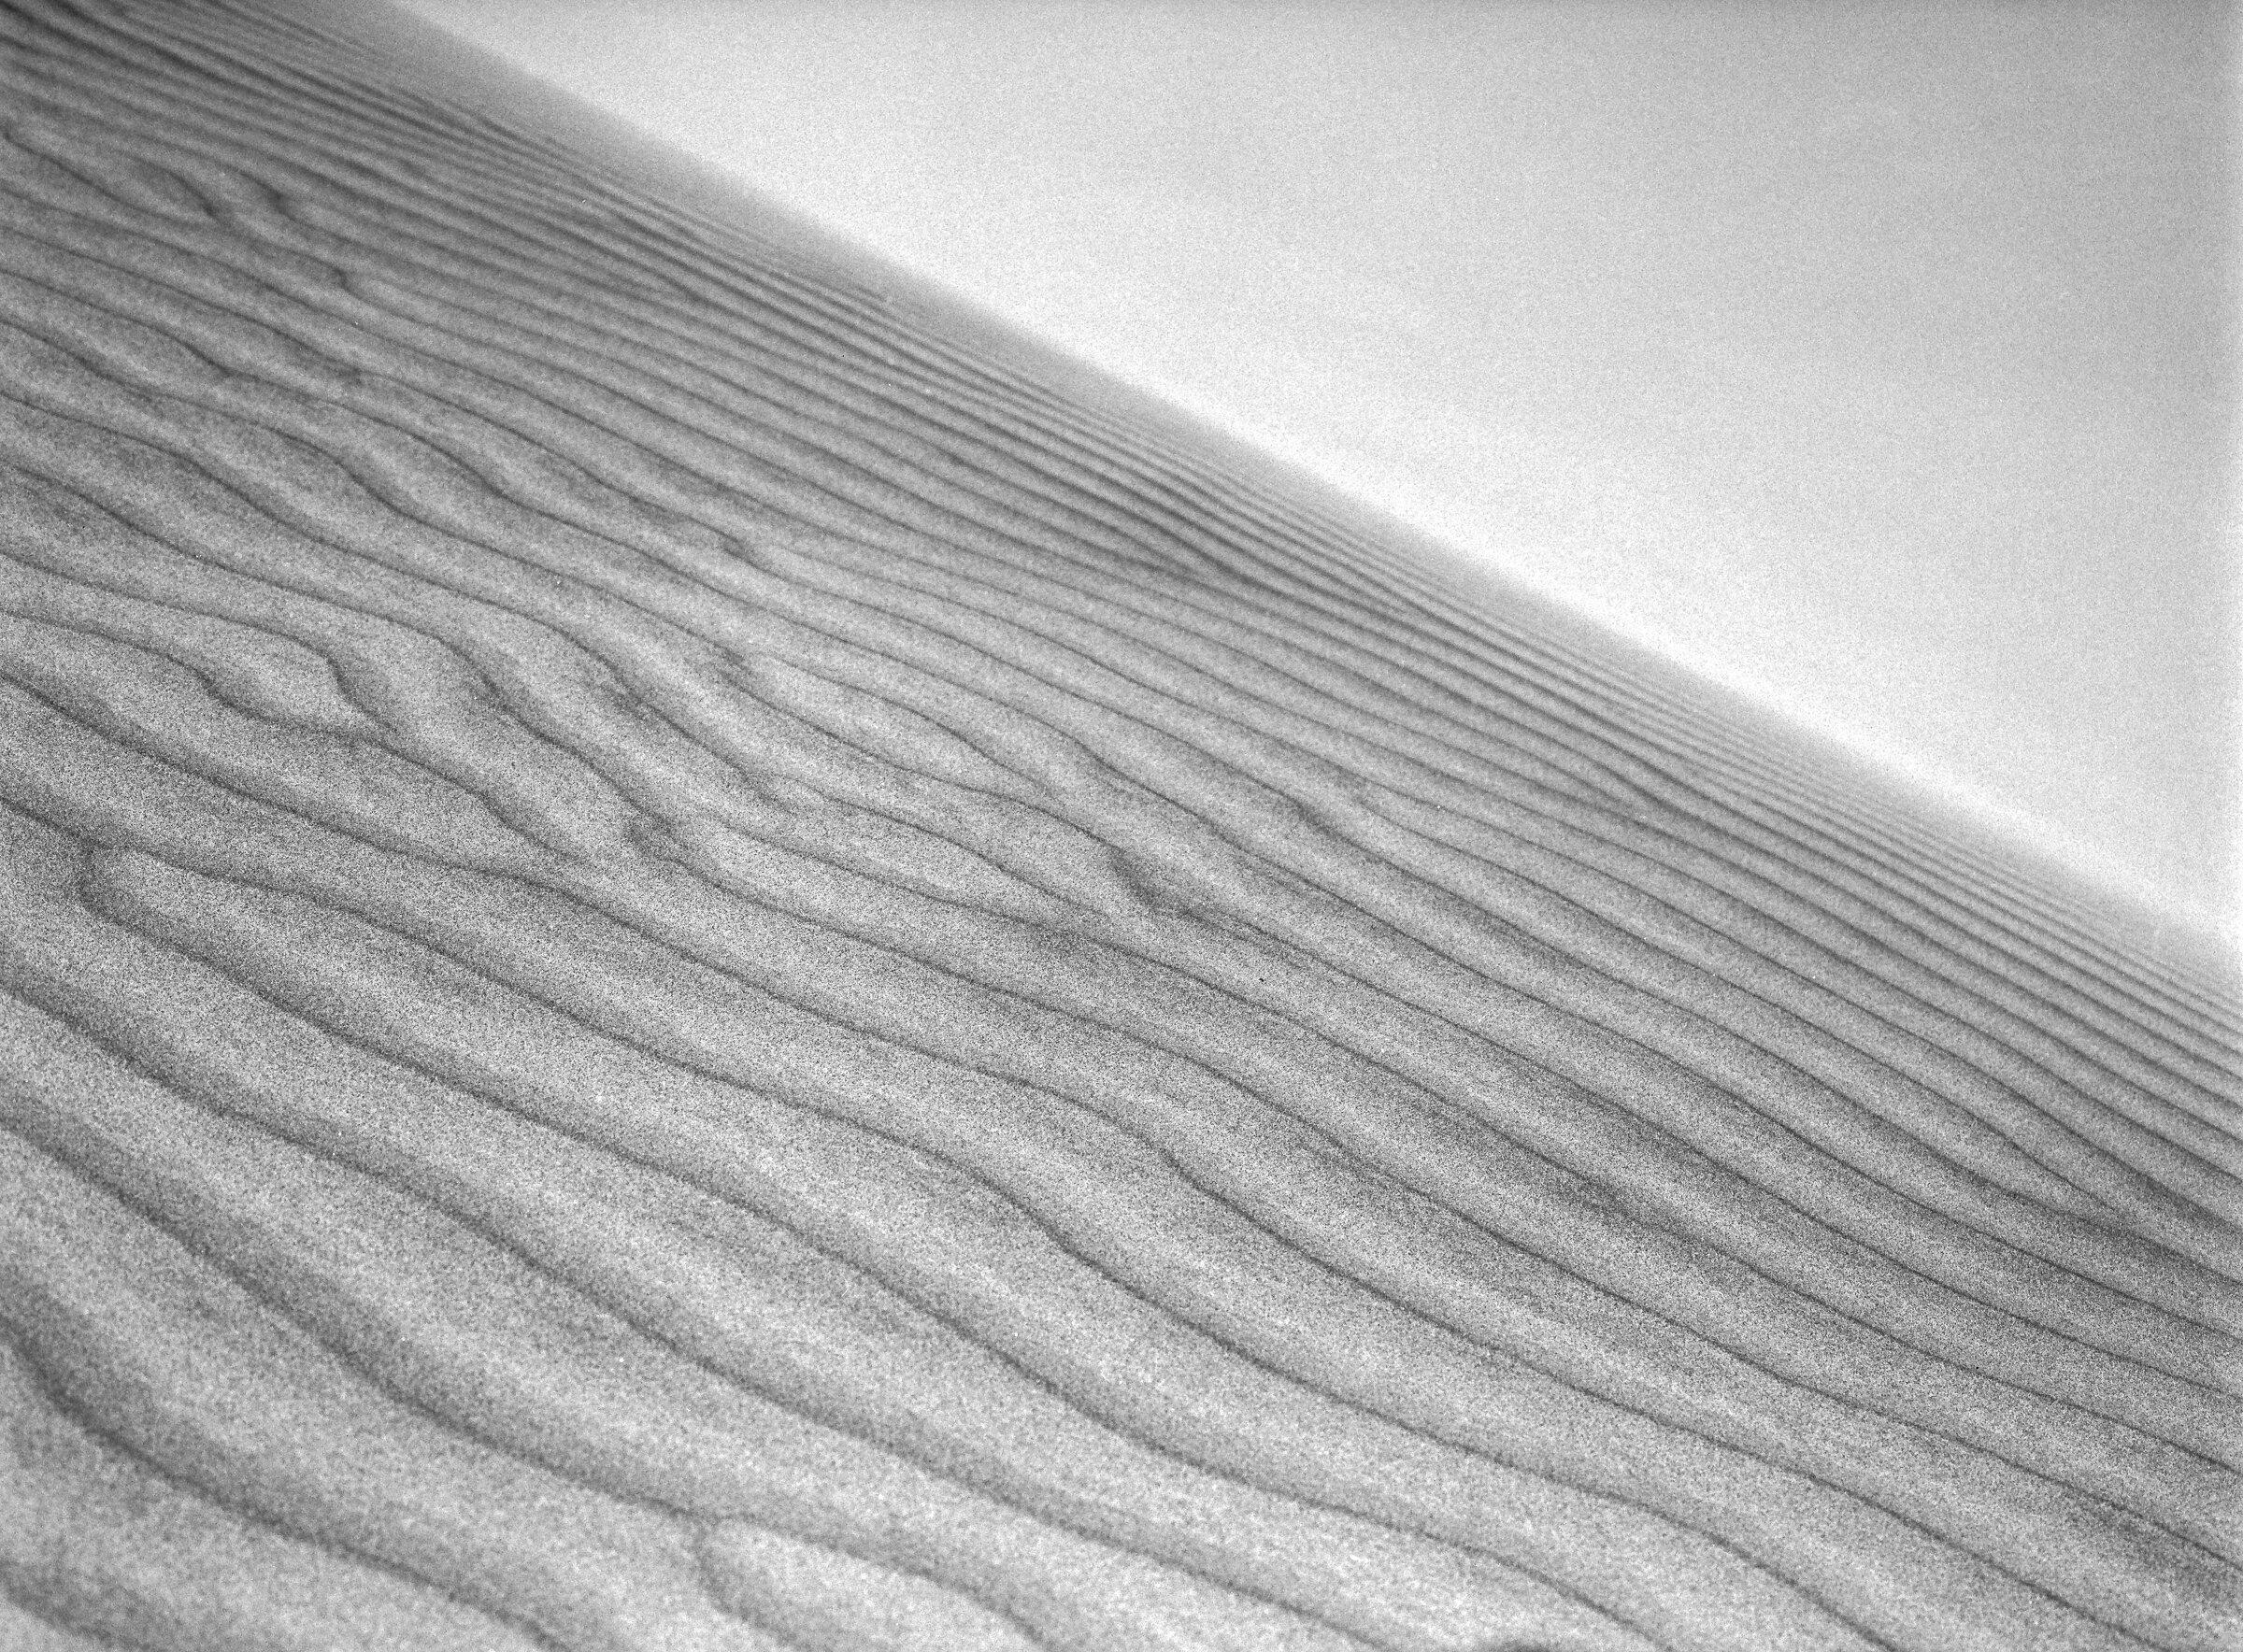 Death-Valley-120mm-BW-Rox-2400px-1.jpg